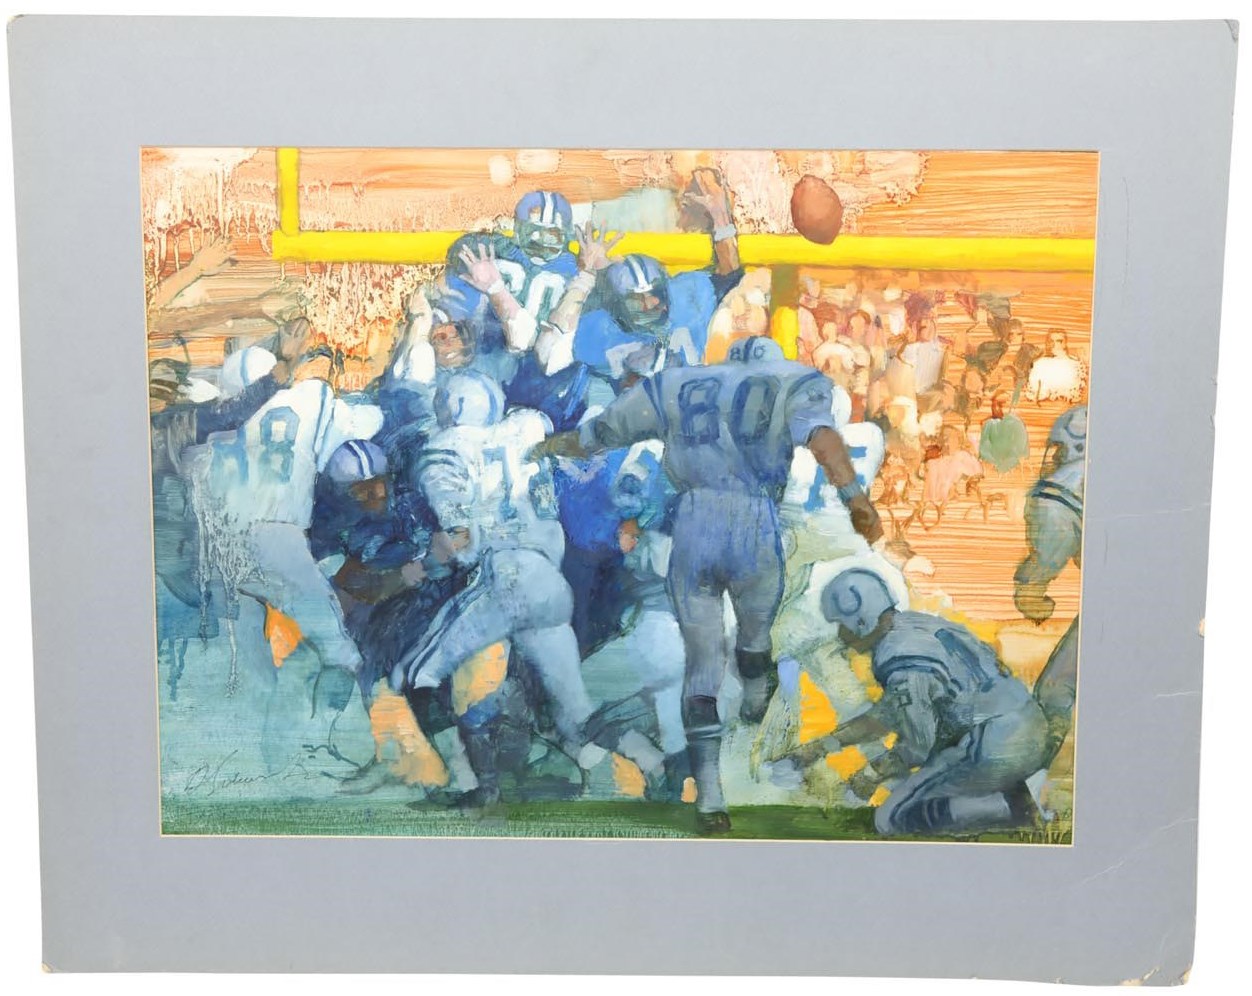 Football - 1971 Super Bowl V "Field Goal Kick" Watercolor by Daniel Schwartz - Published in Super Bowl IX Program